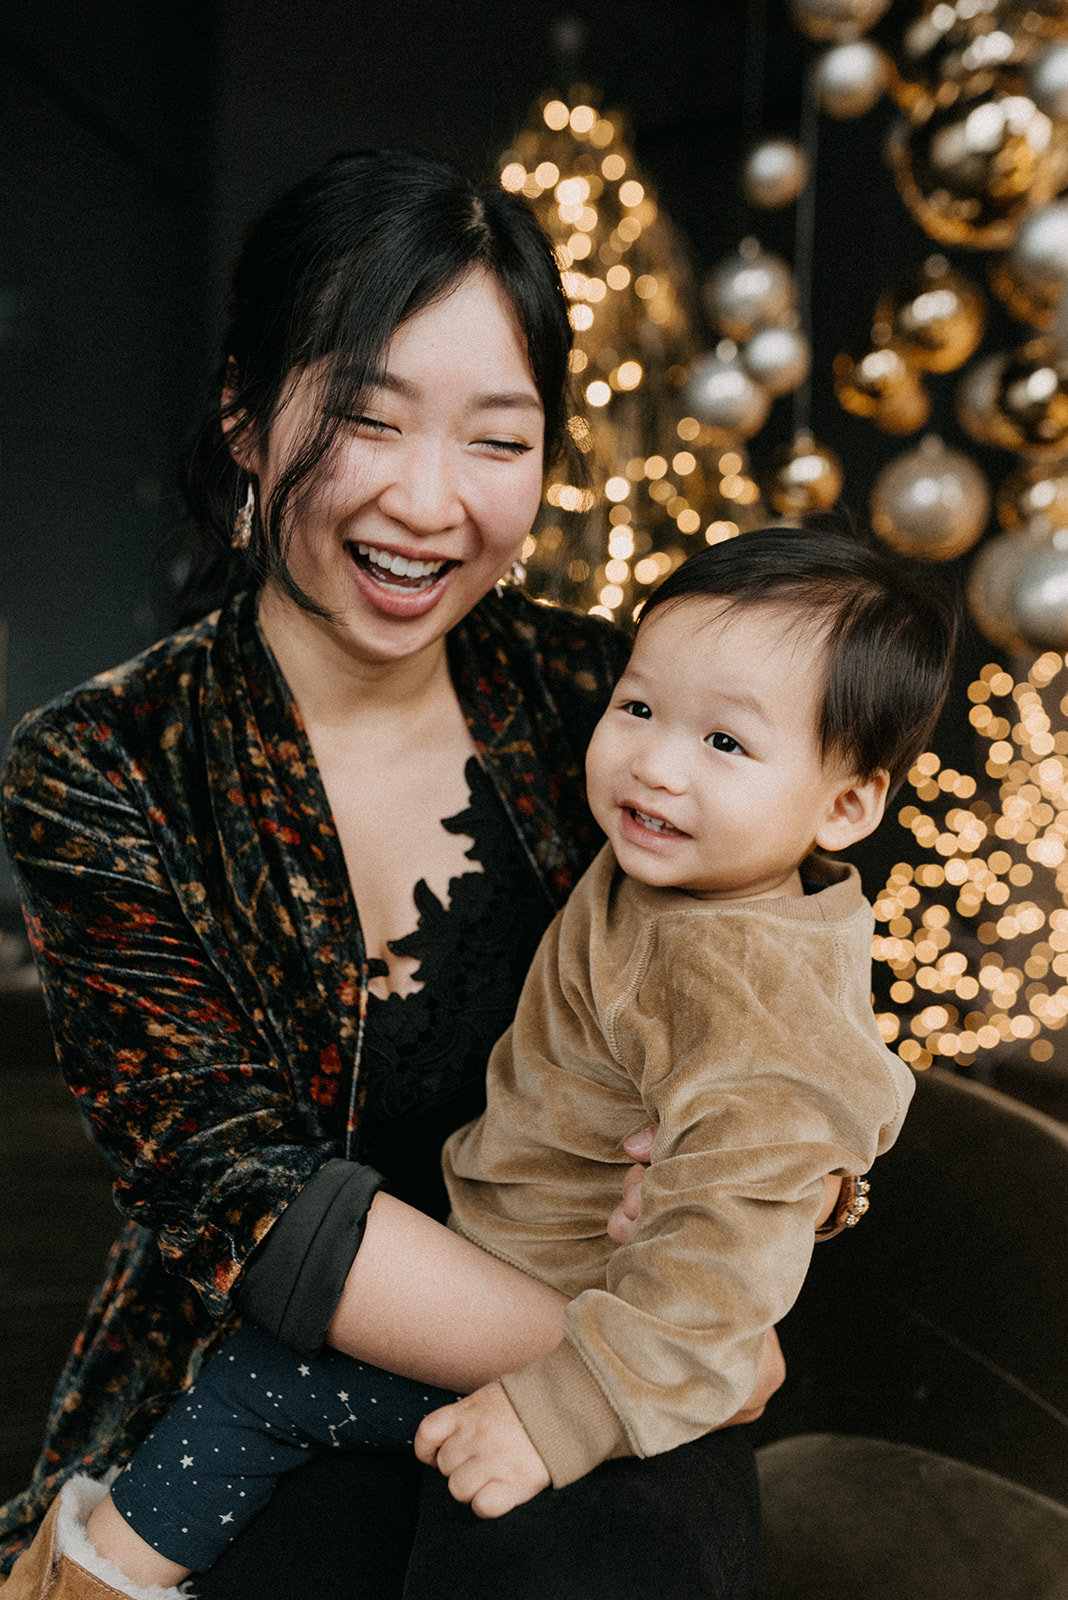 Joyful mother and son photo with Christmas vibes